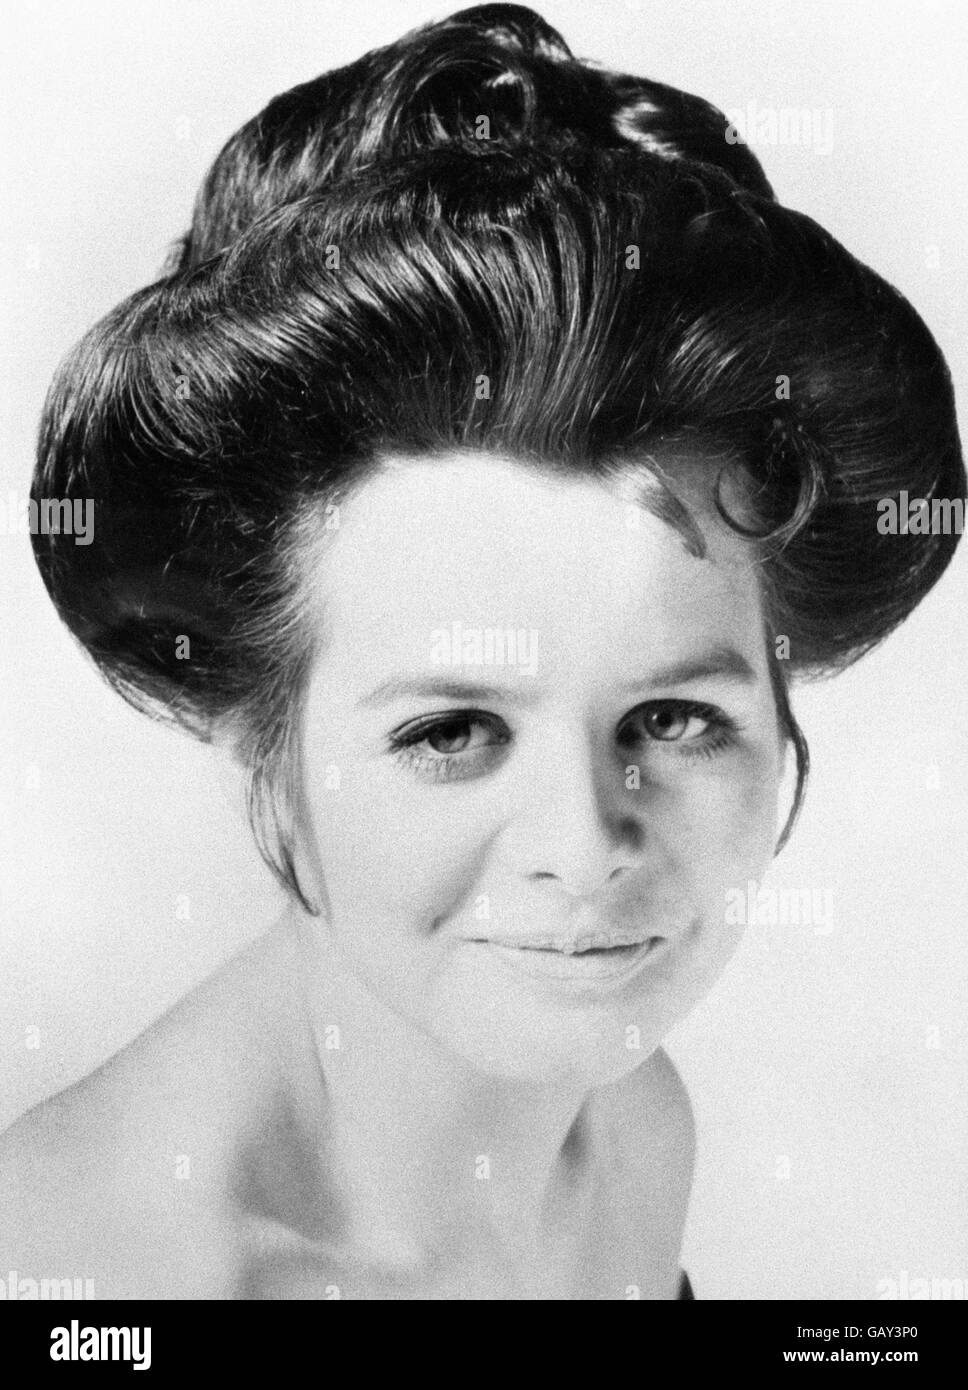 Hairstyles - 1970s Stock Photo